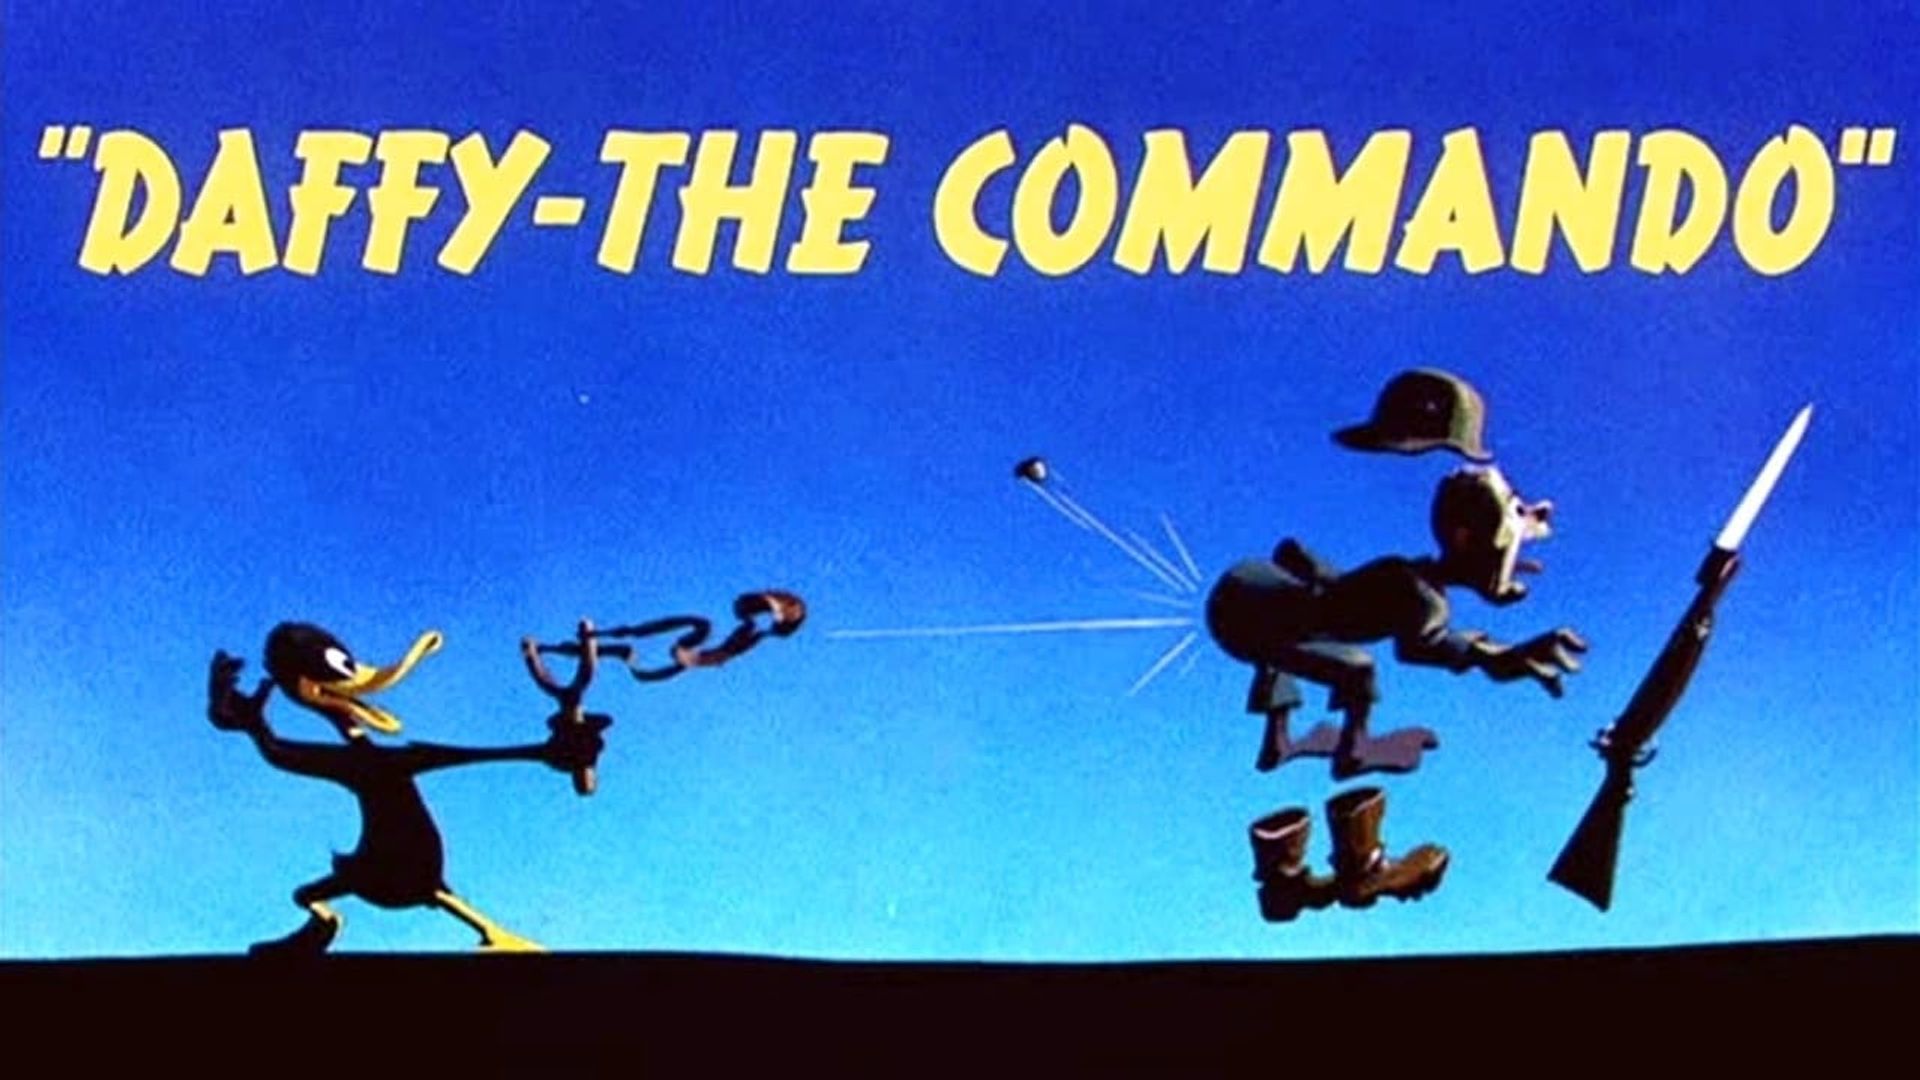 Daffy - The Commando background